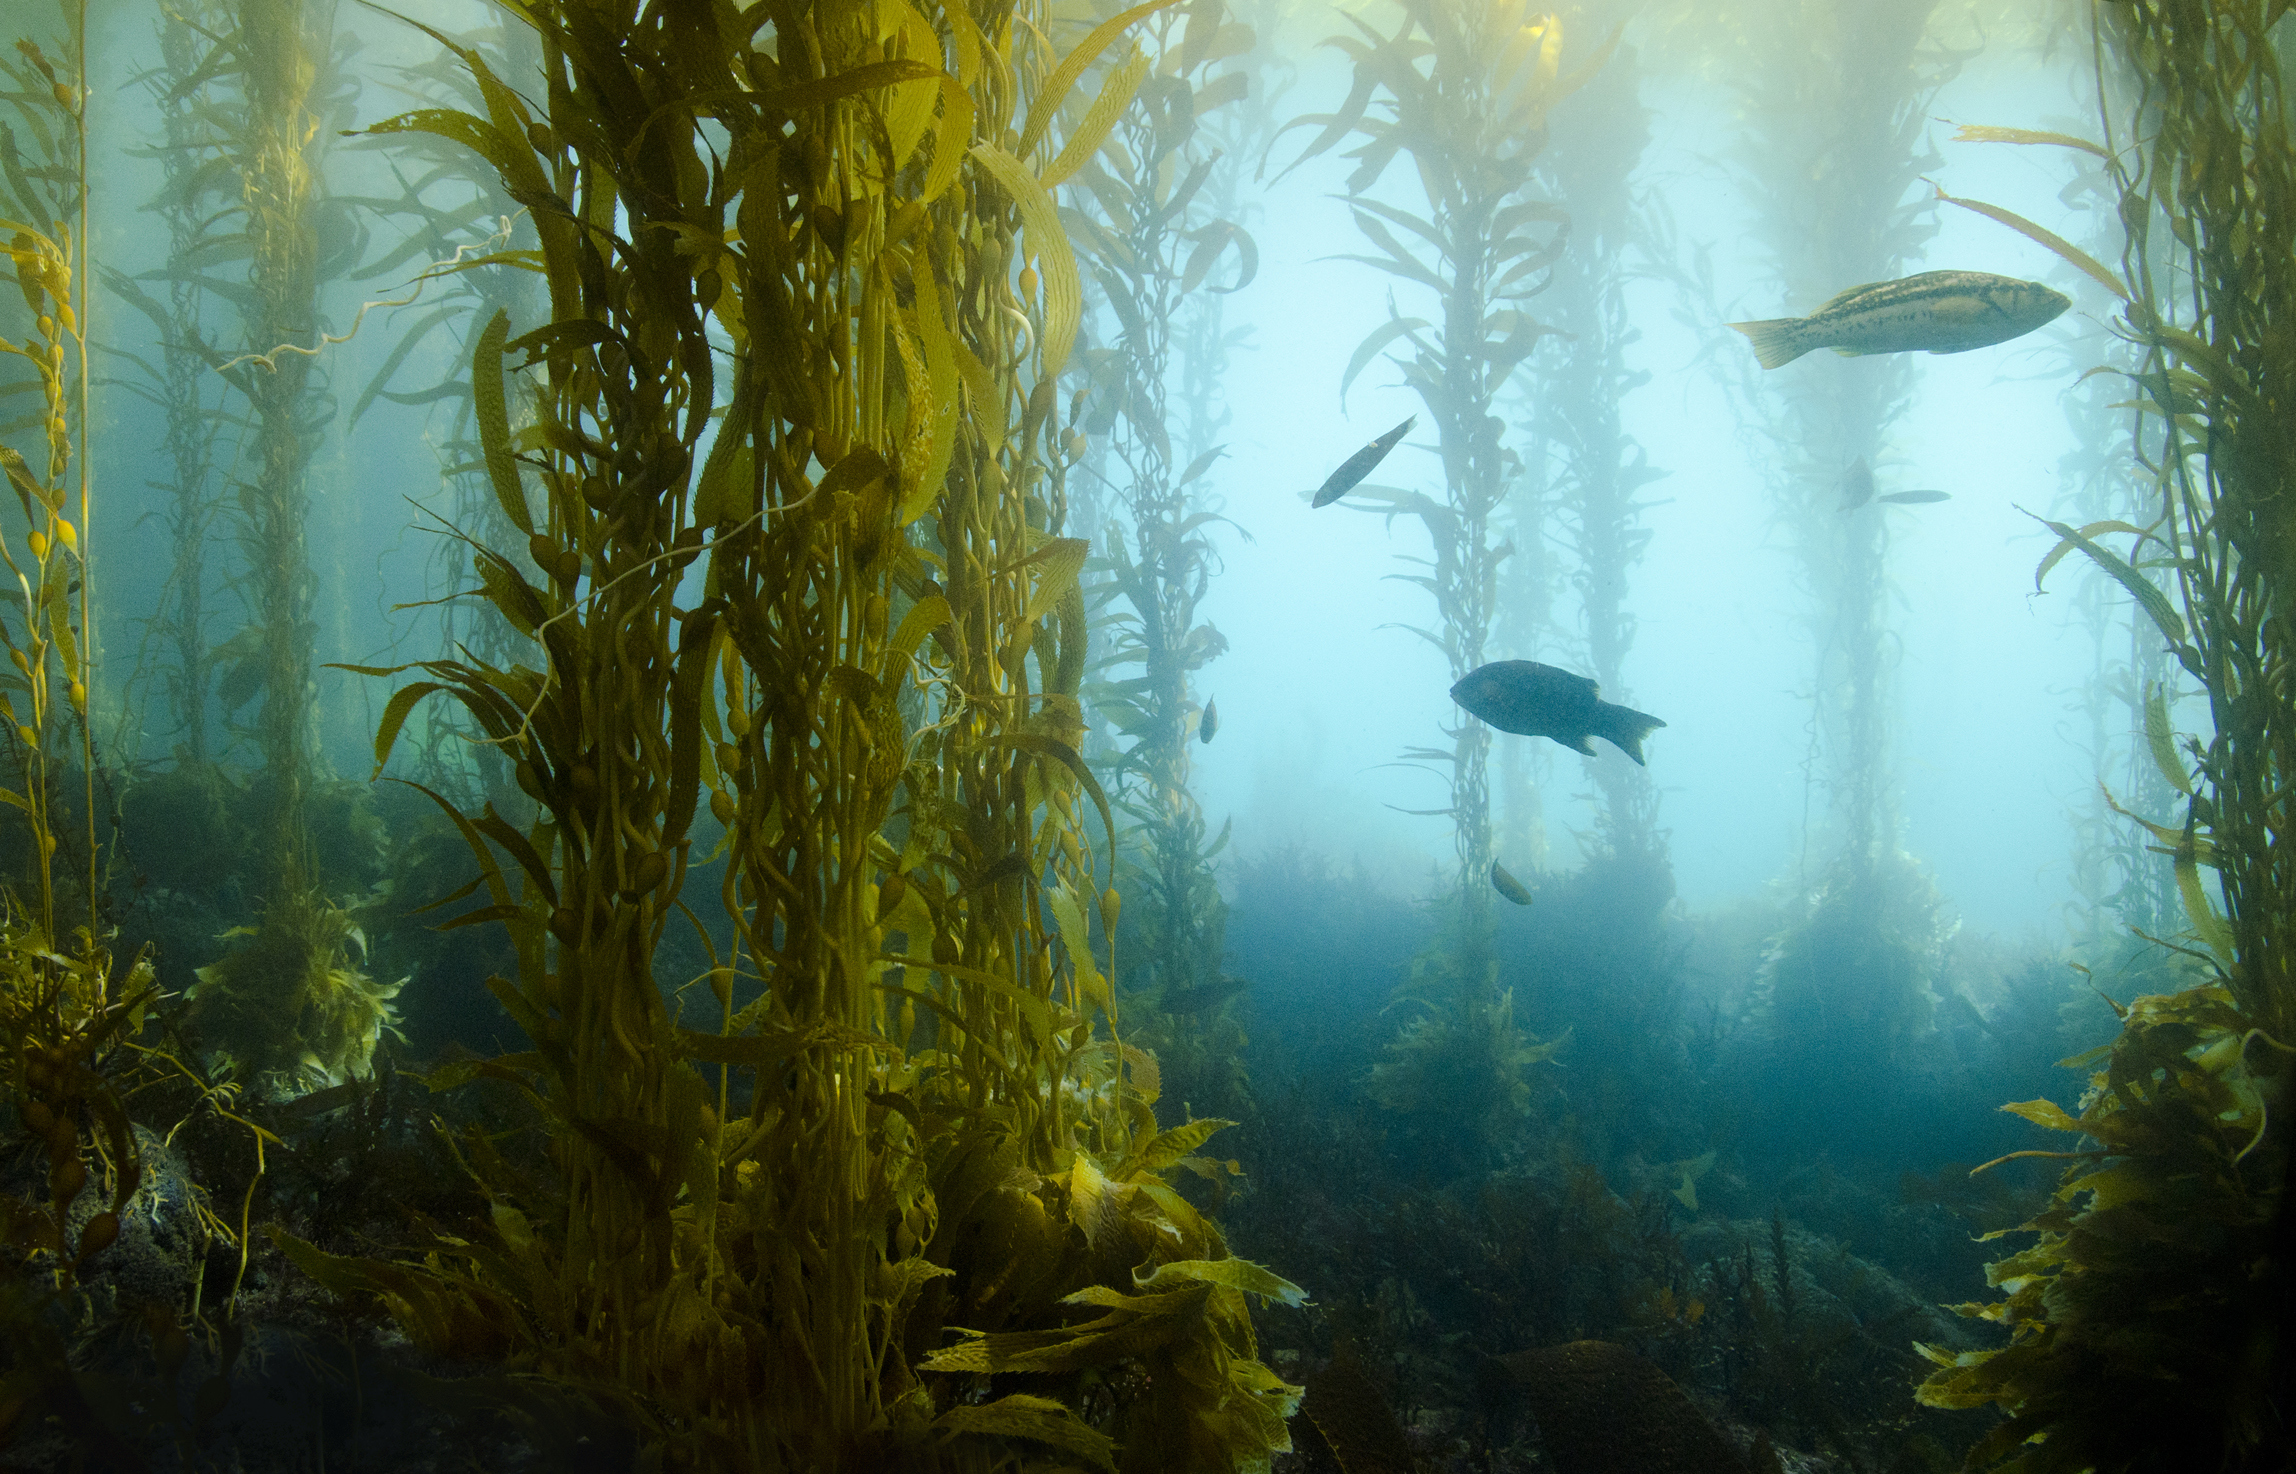 Kelp forests giant seaweed underwater with fish swimming around:  iStock-150671961.jpg